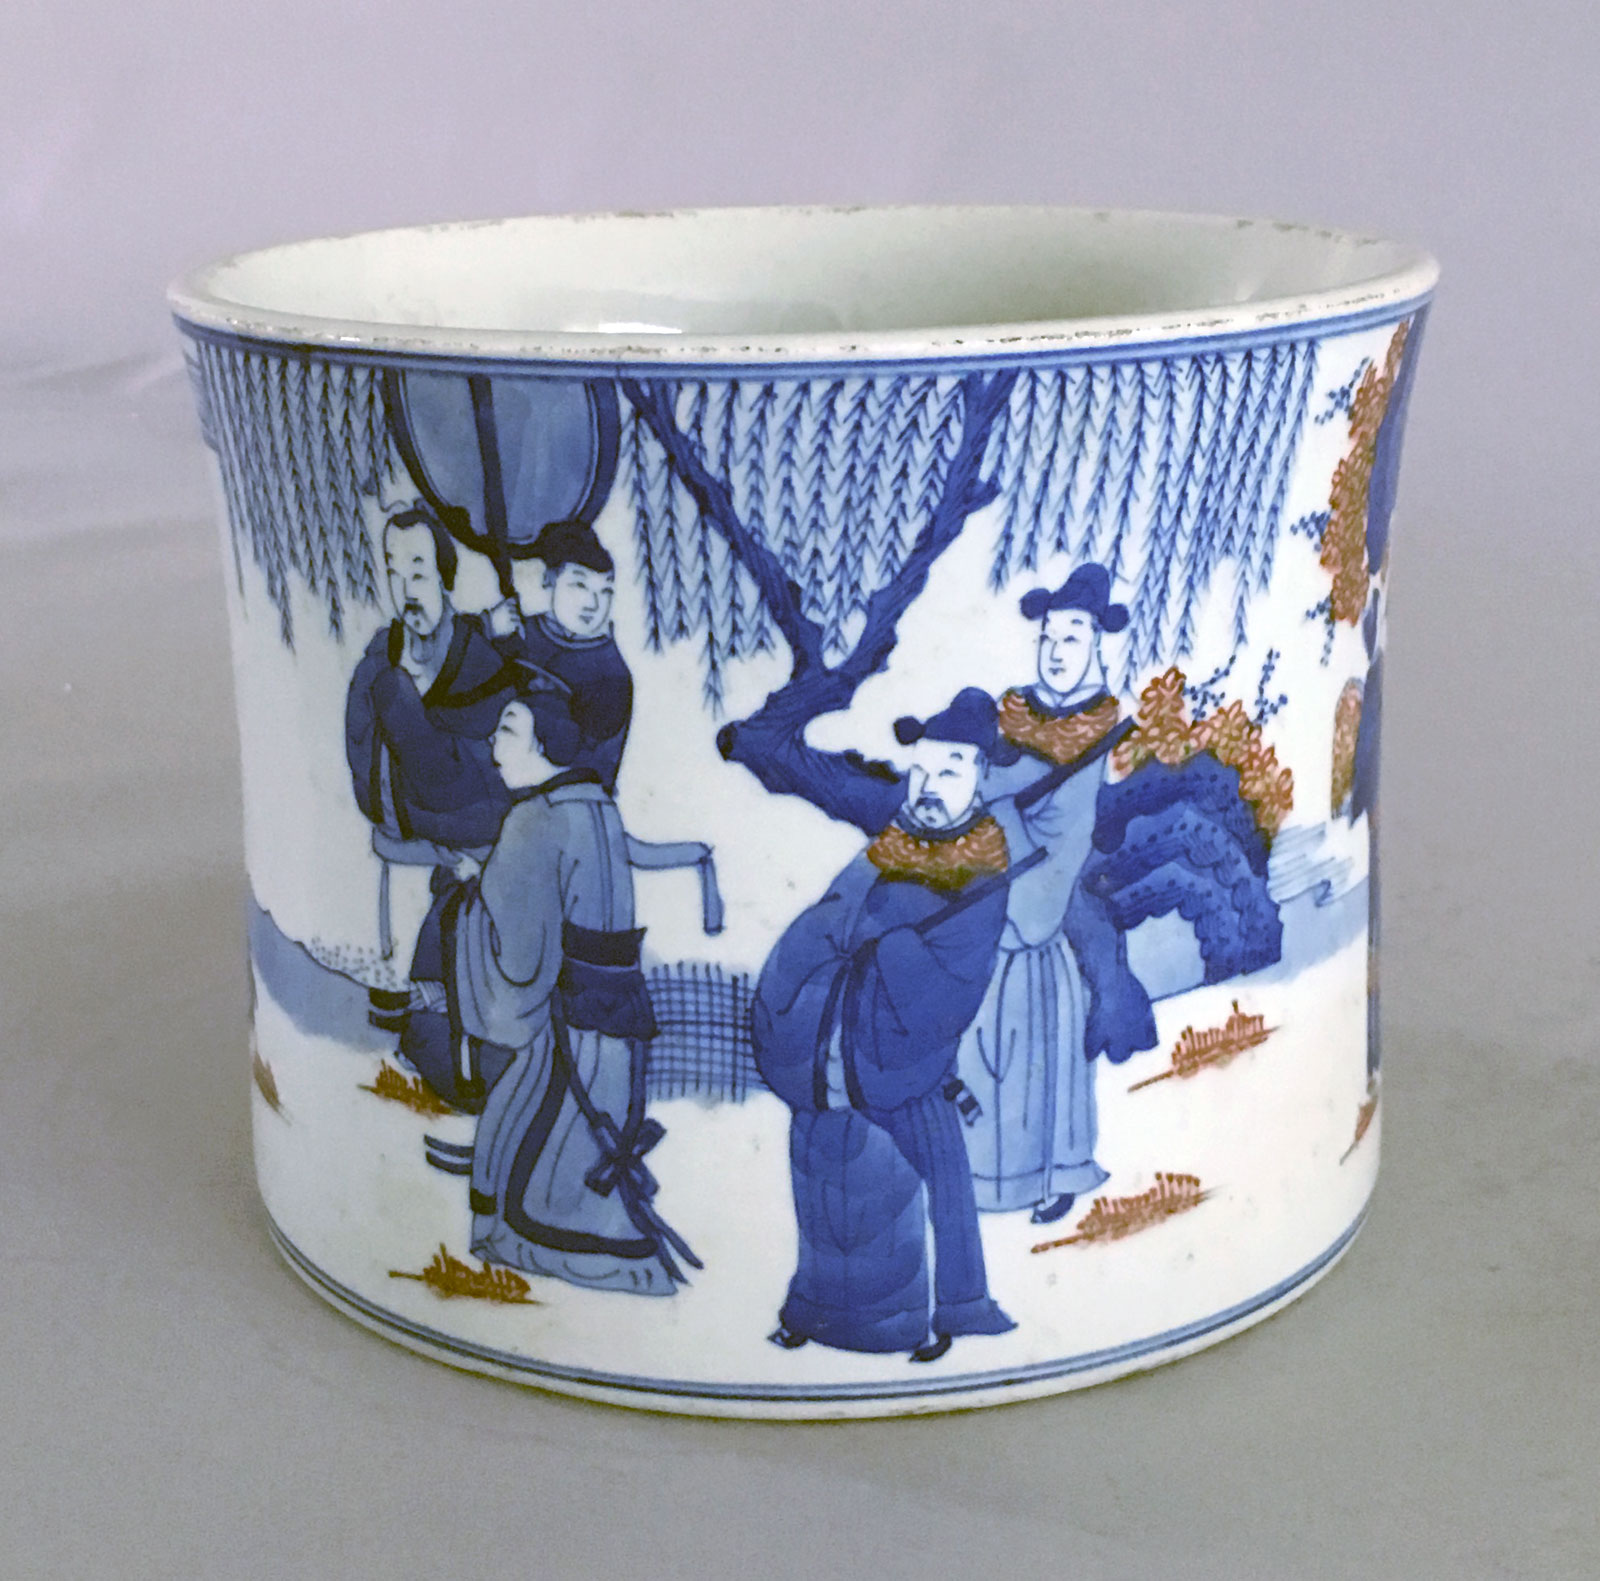 Antique Chinese Porcelain Brush Pot